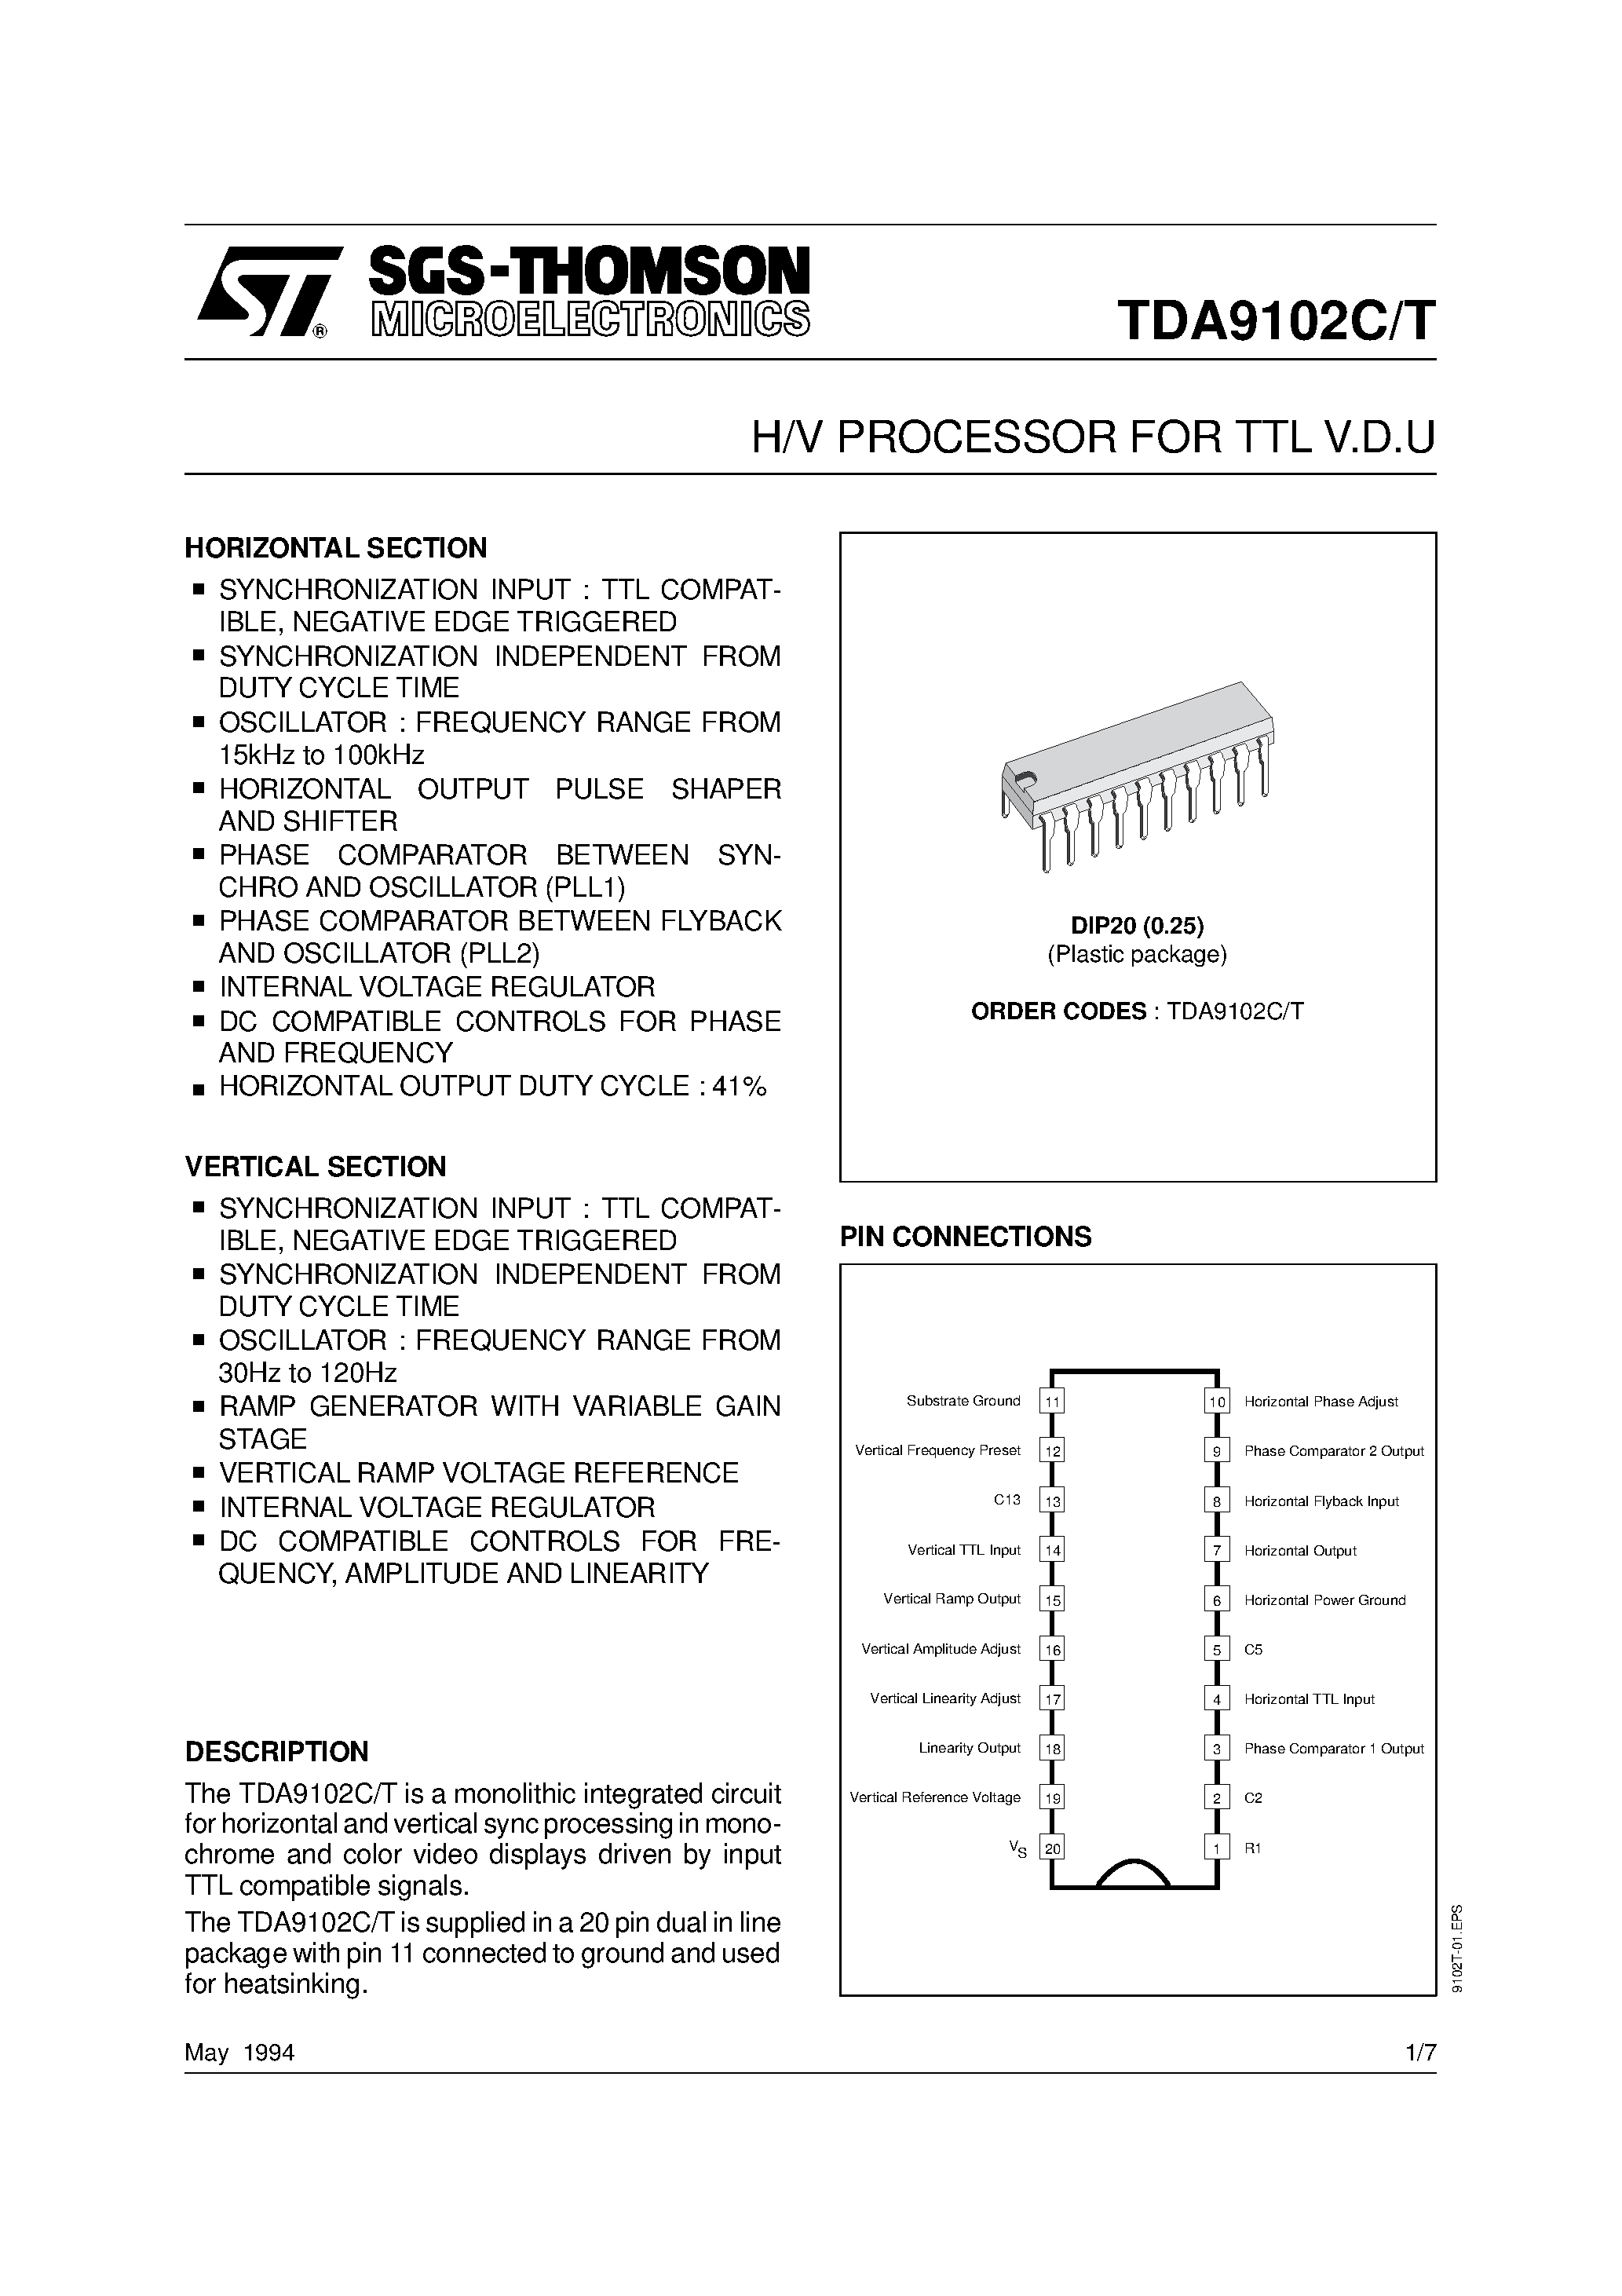 Даташит TDA9102T-H/V PROCESSOR FOR TTL V.D.U страница 1